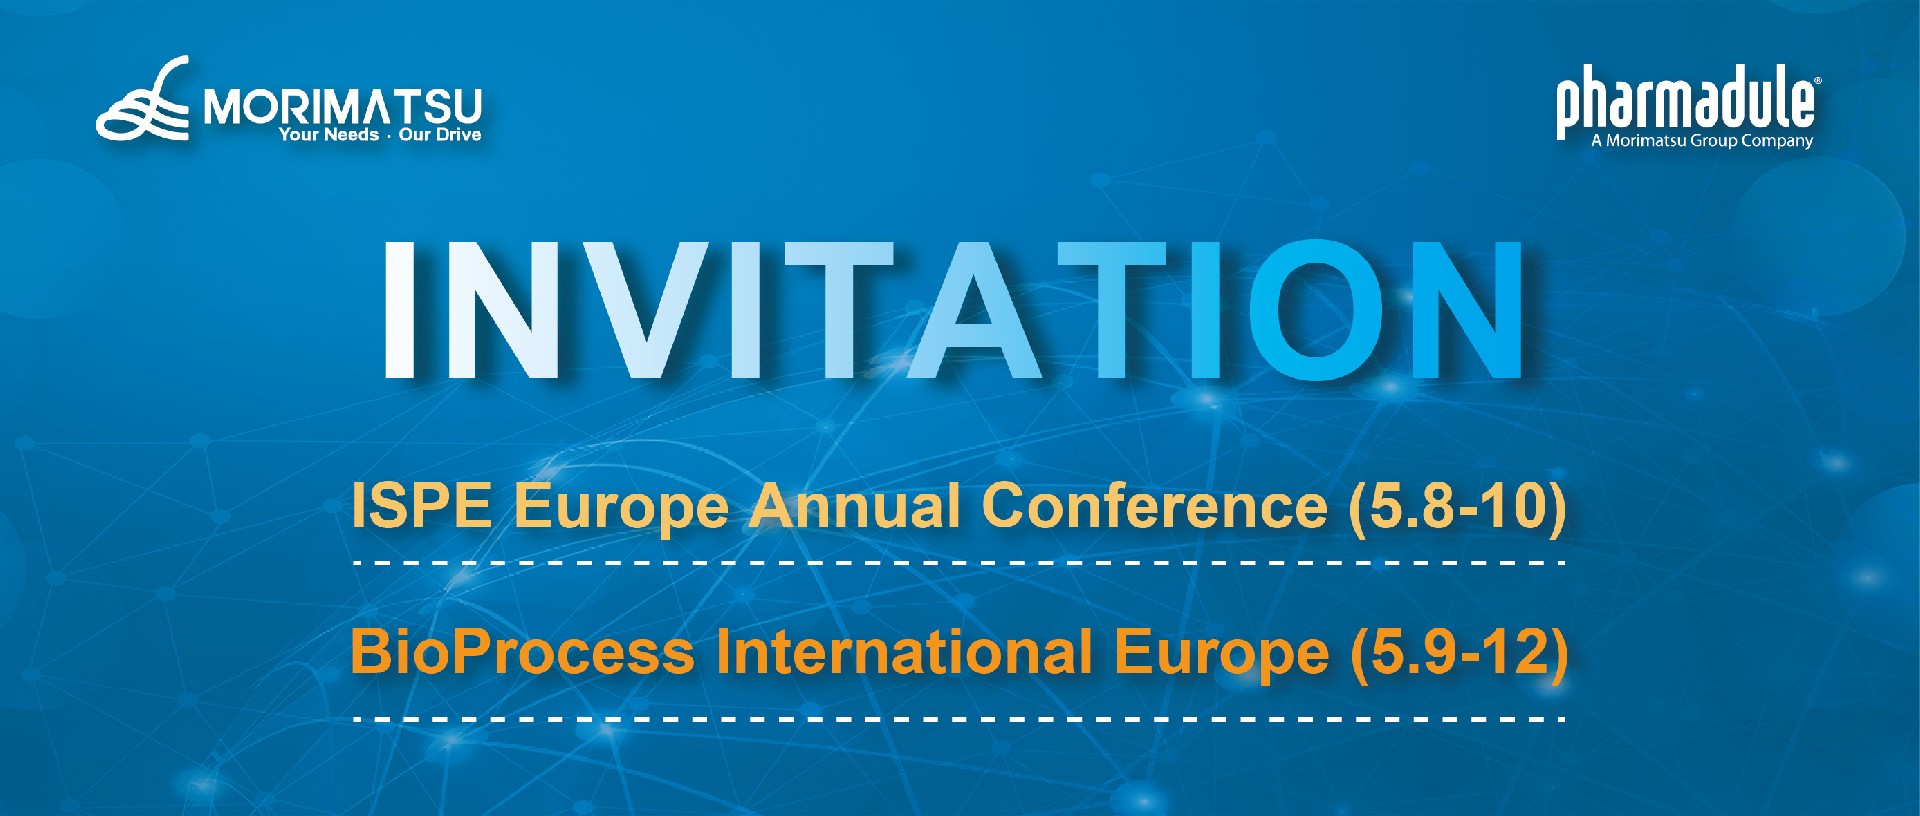 Invitation | Pharmadule Morimatsu AB invites you to attend conferences ISPE Europe Annual Conference & BPI Europe